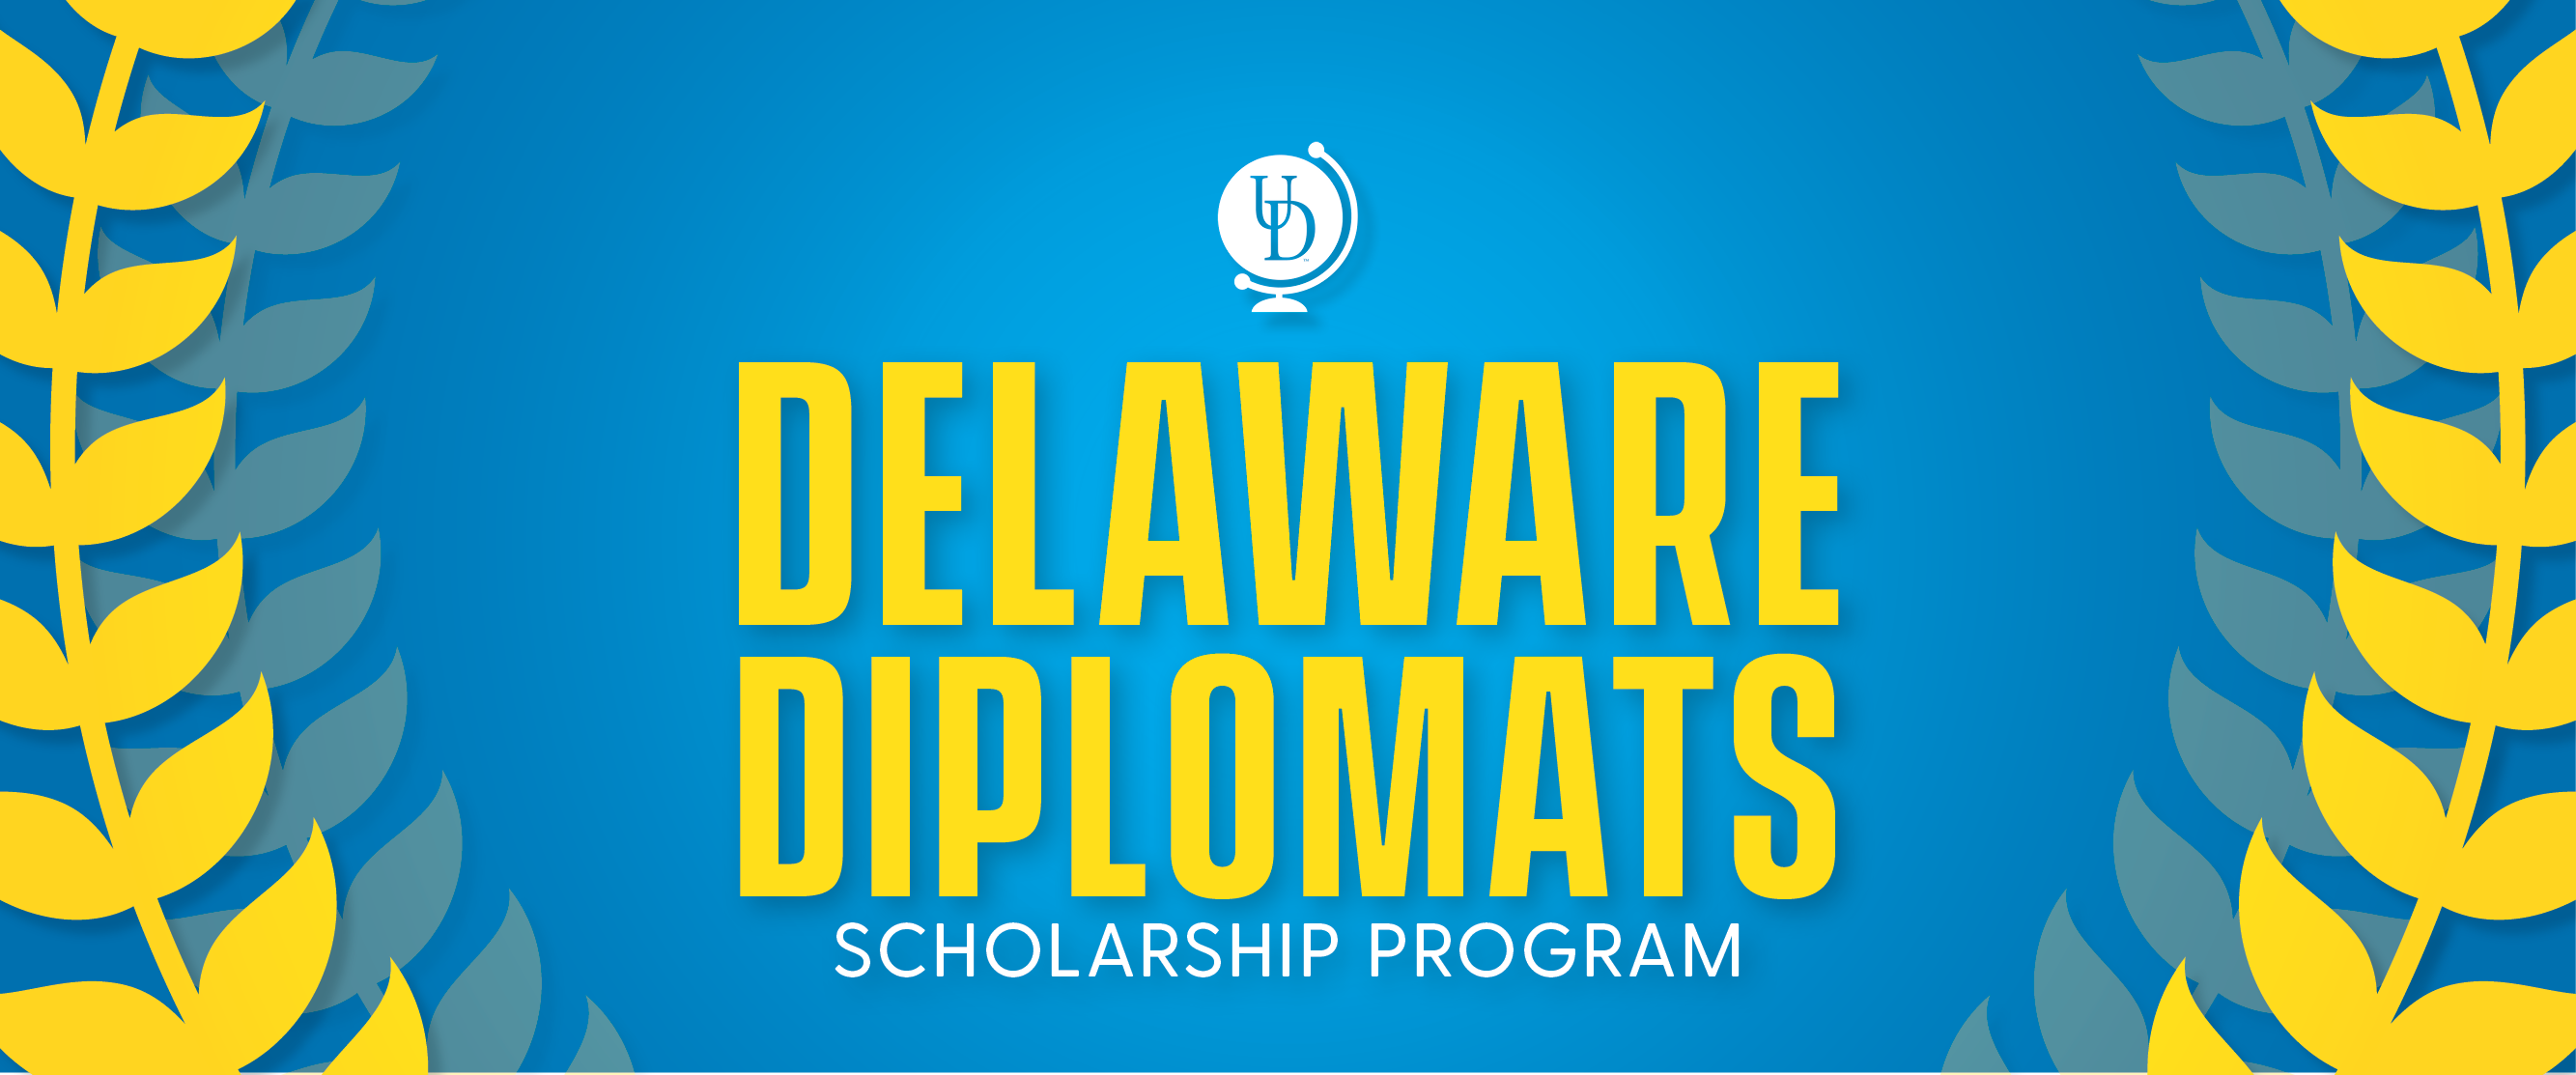 Delaware Diplomats scholarship program